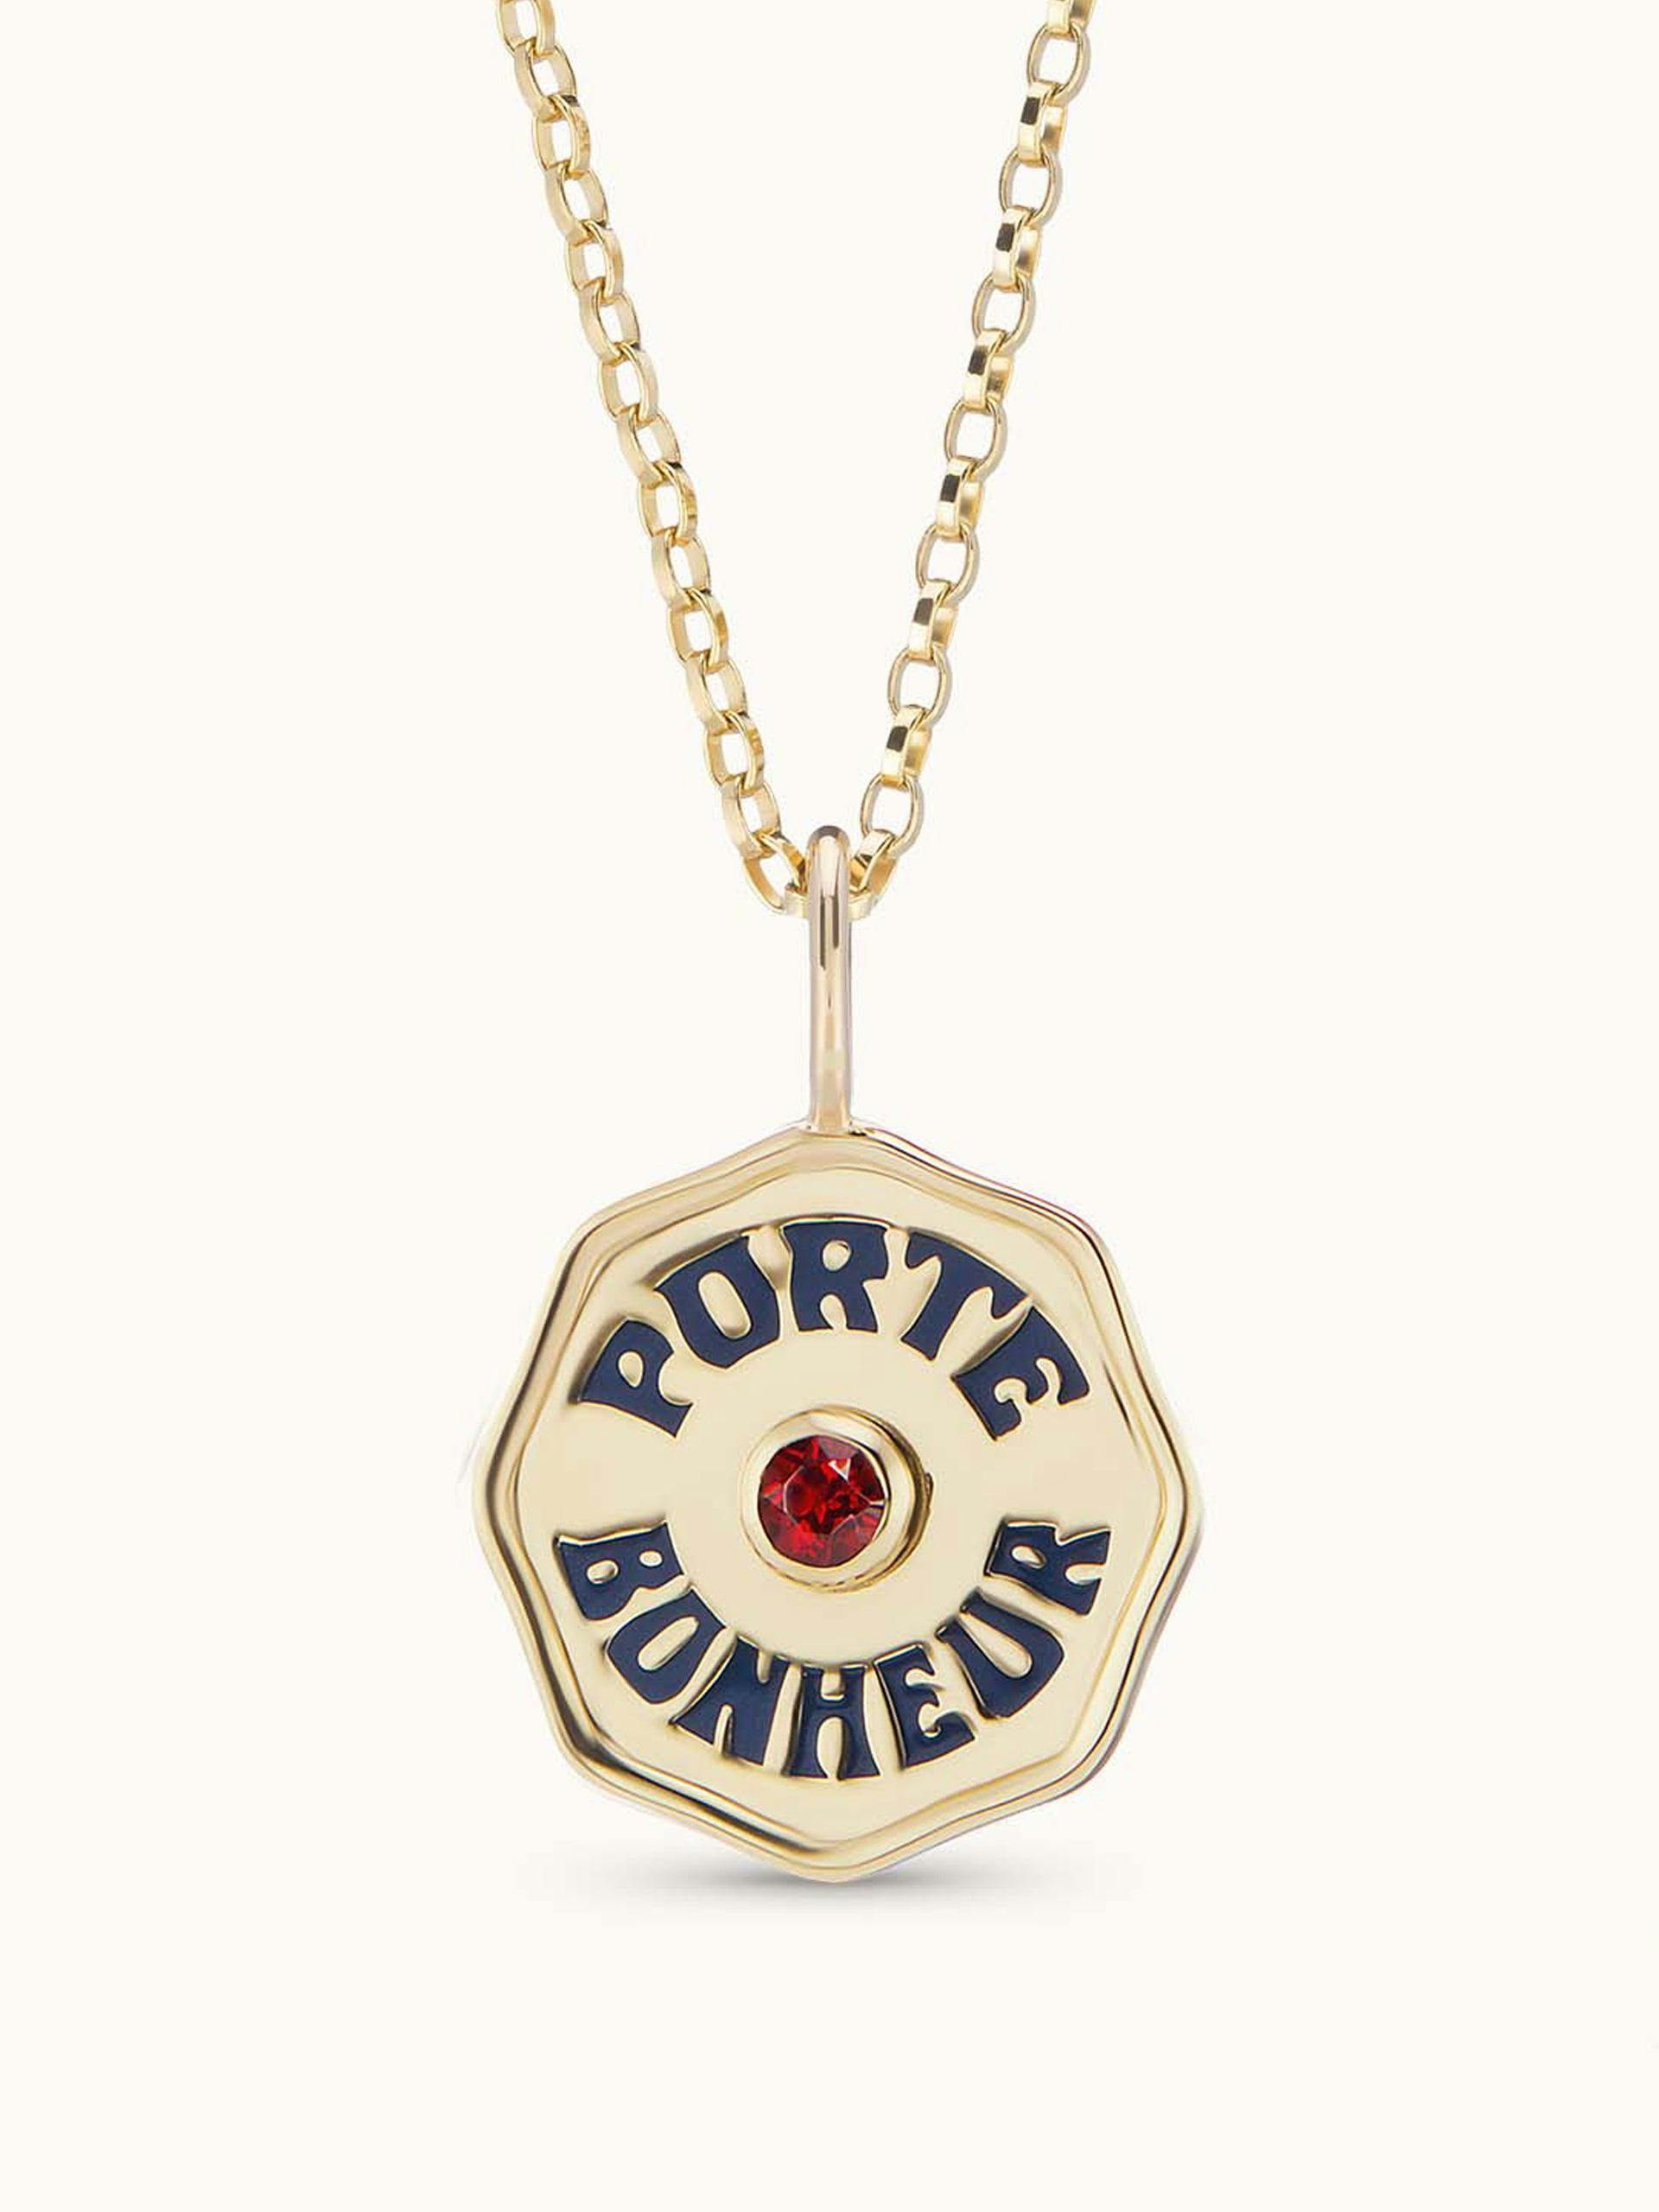 Mini Porte Bonheur necklace in ruby